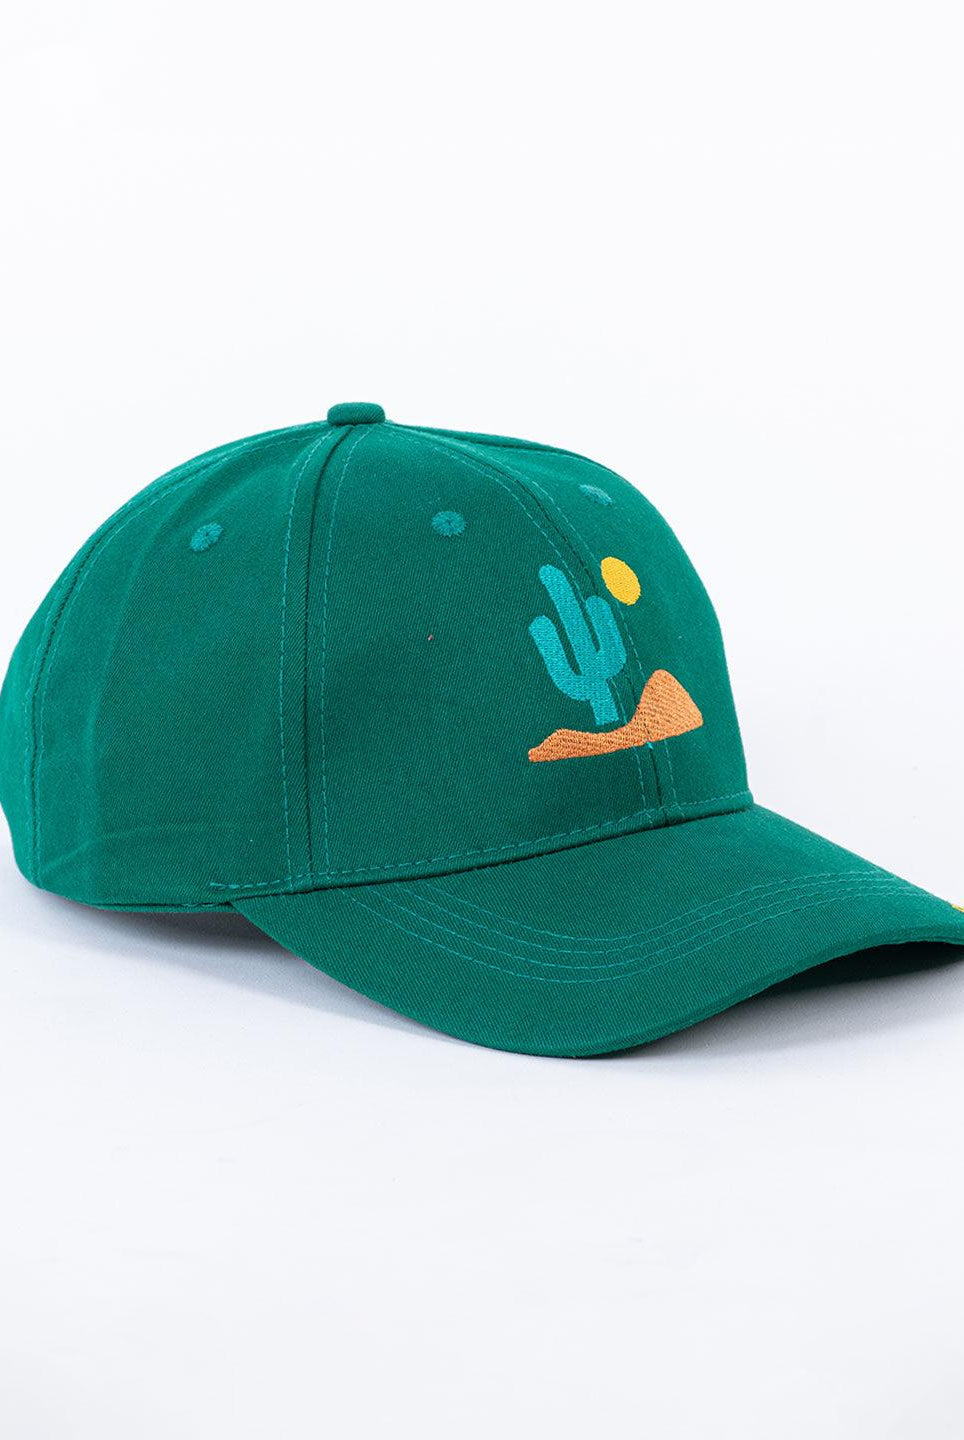 Rise N Shine Cactus Embroidered Green Free Size Unisex Baseball Caps - Tistabene